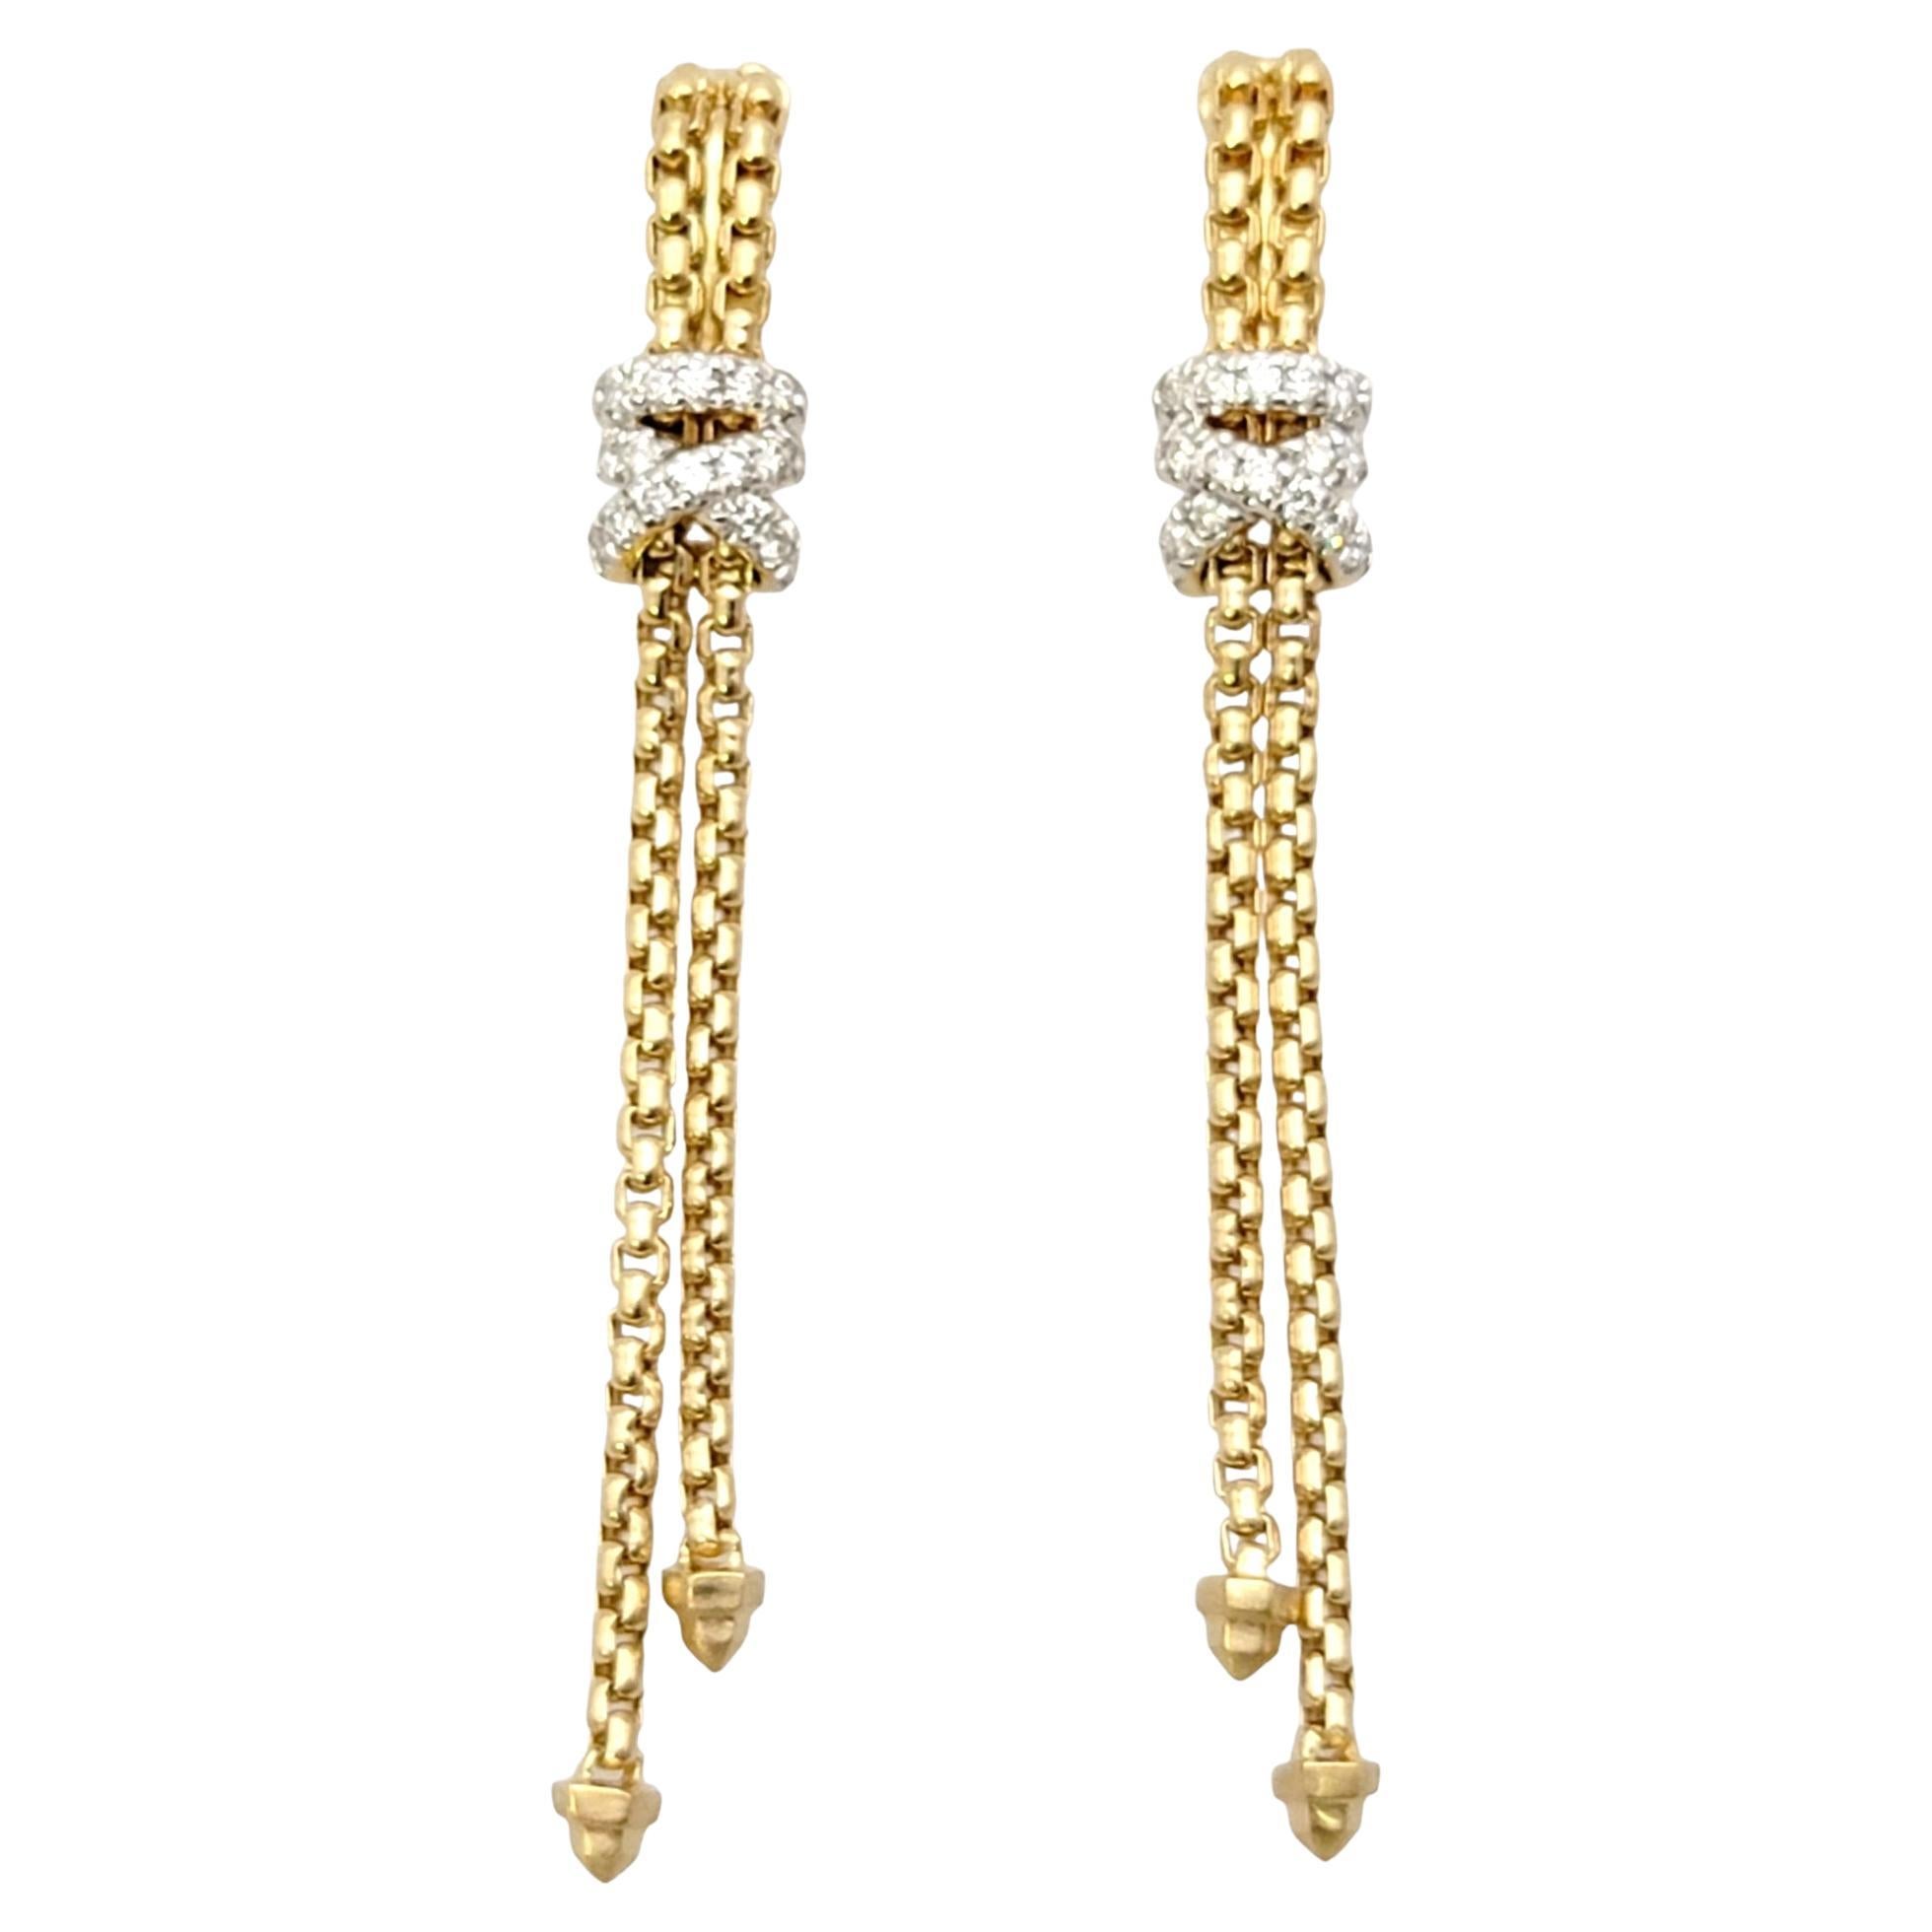 David Yurman Helena Box Chain Drop Earrings with Diamonds in 18 Karat Gold